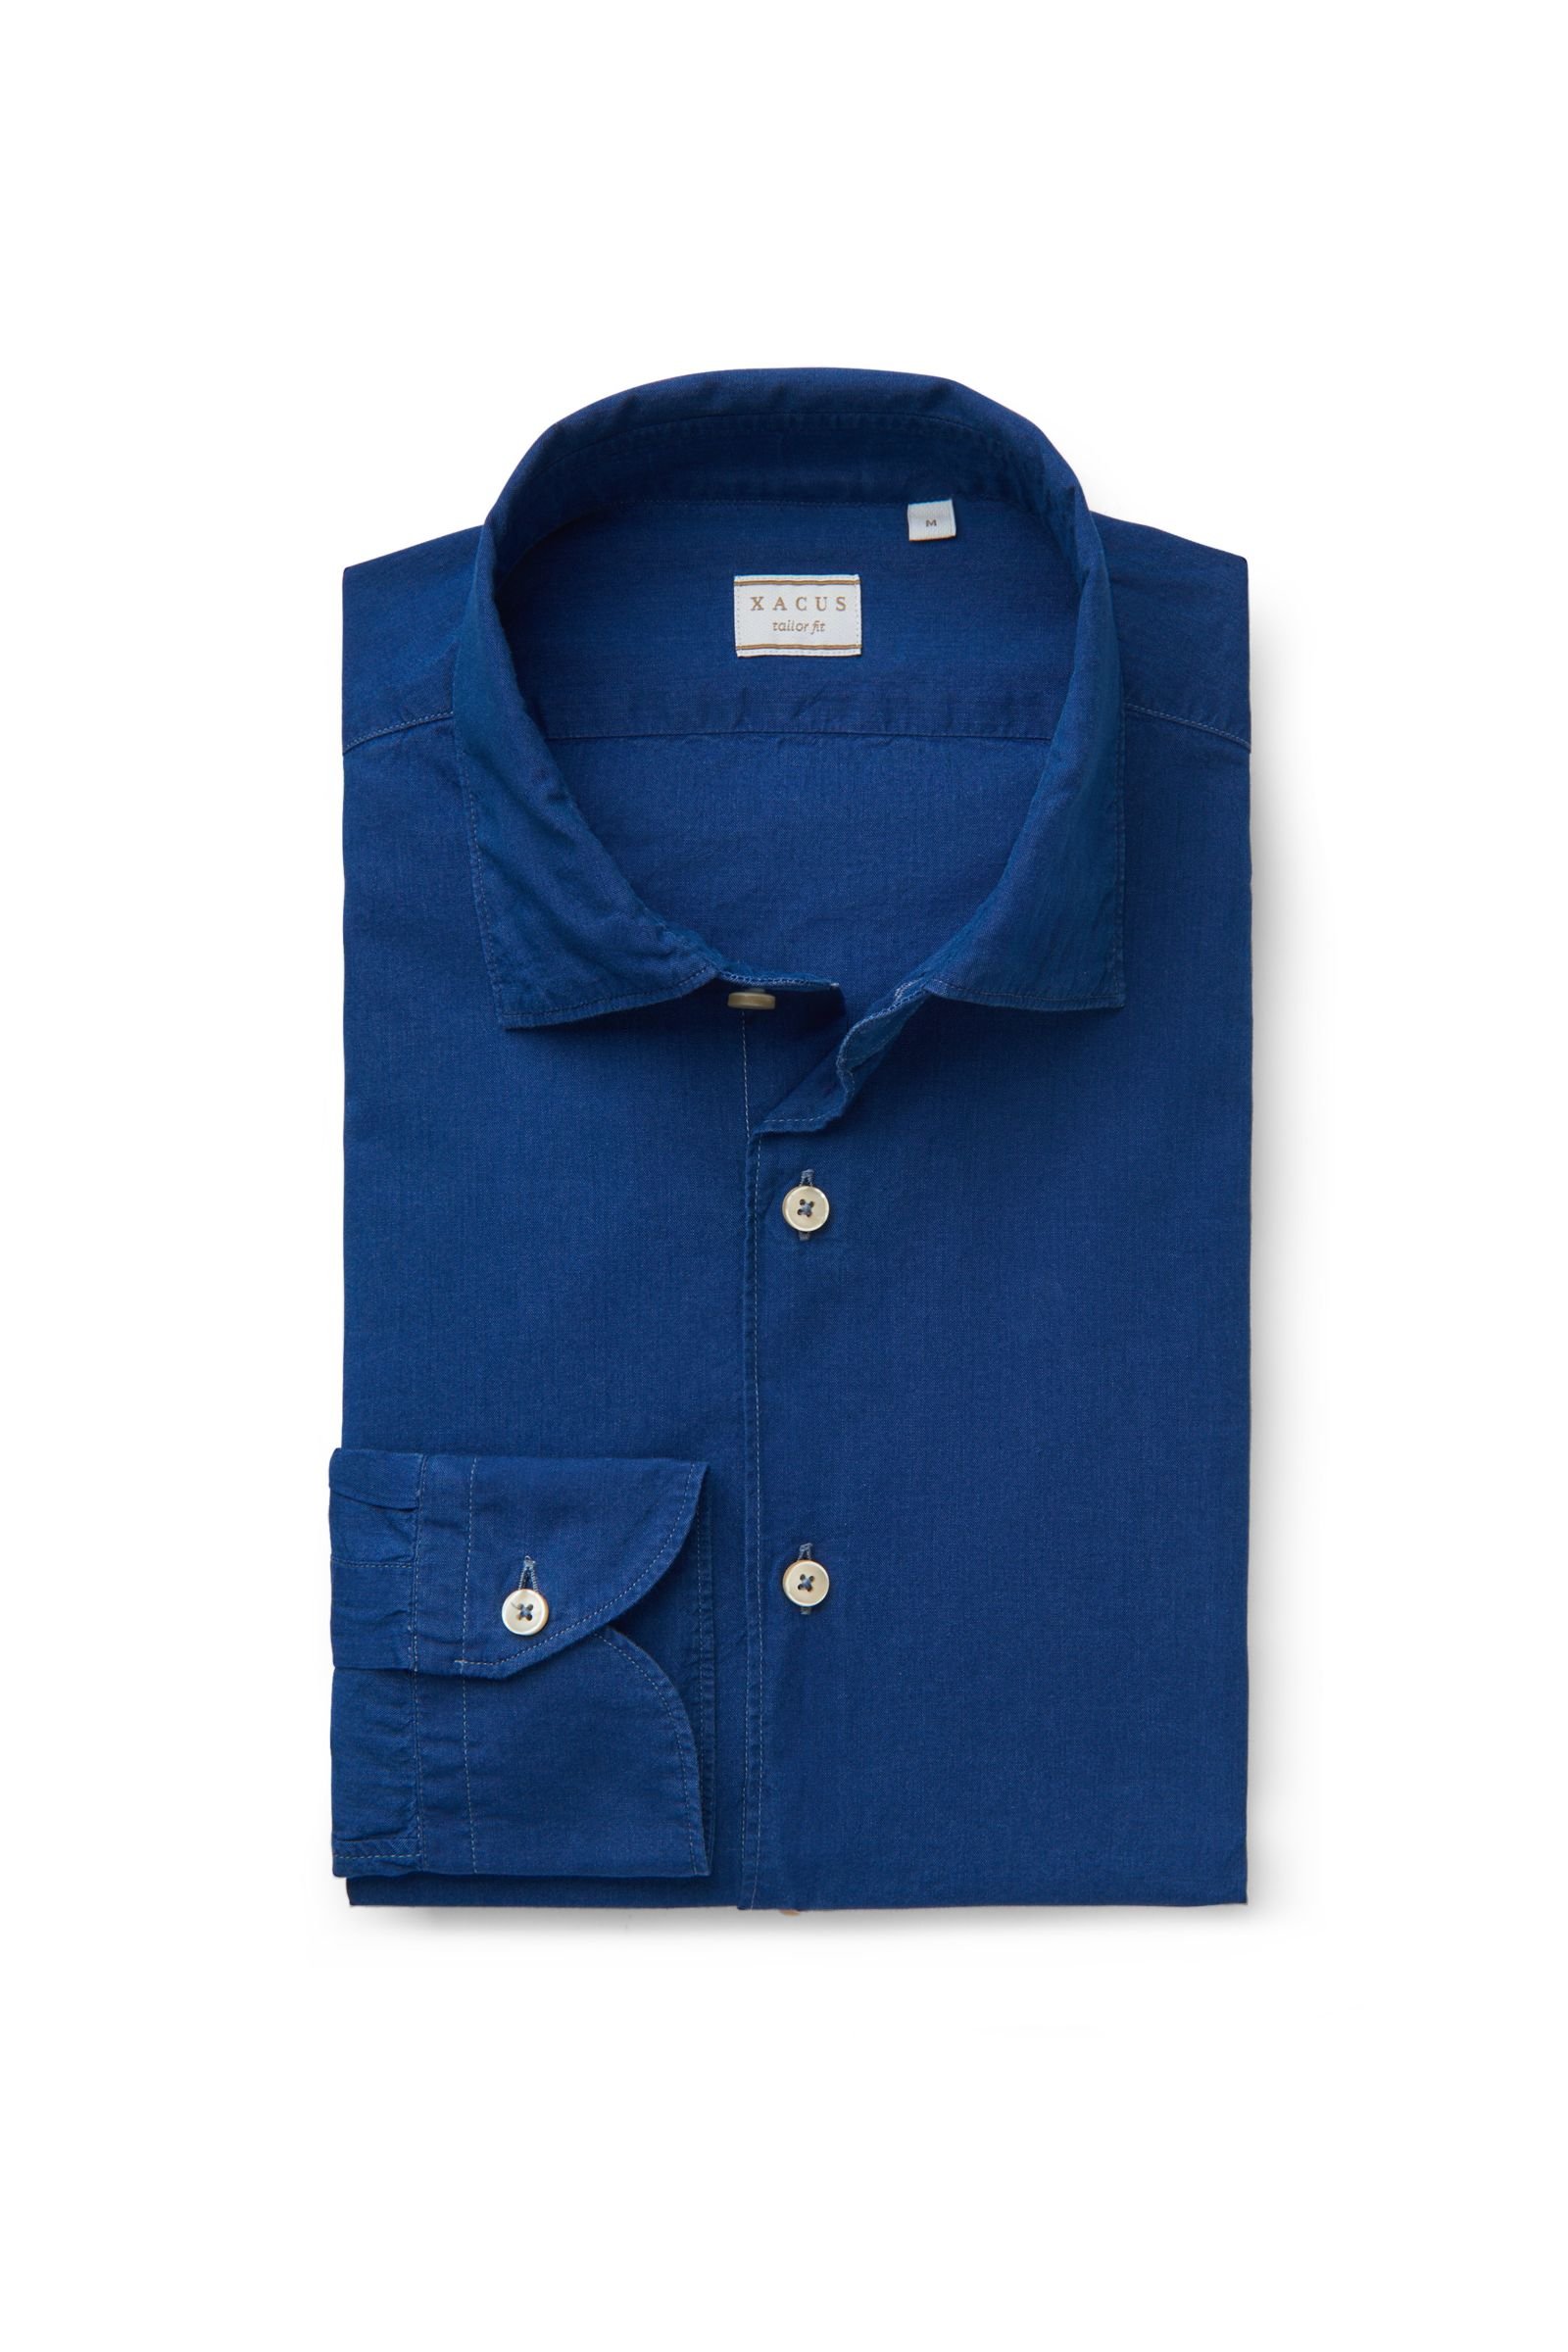 Chambray shirt 'Tailor Fit' slim collar dark blue